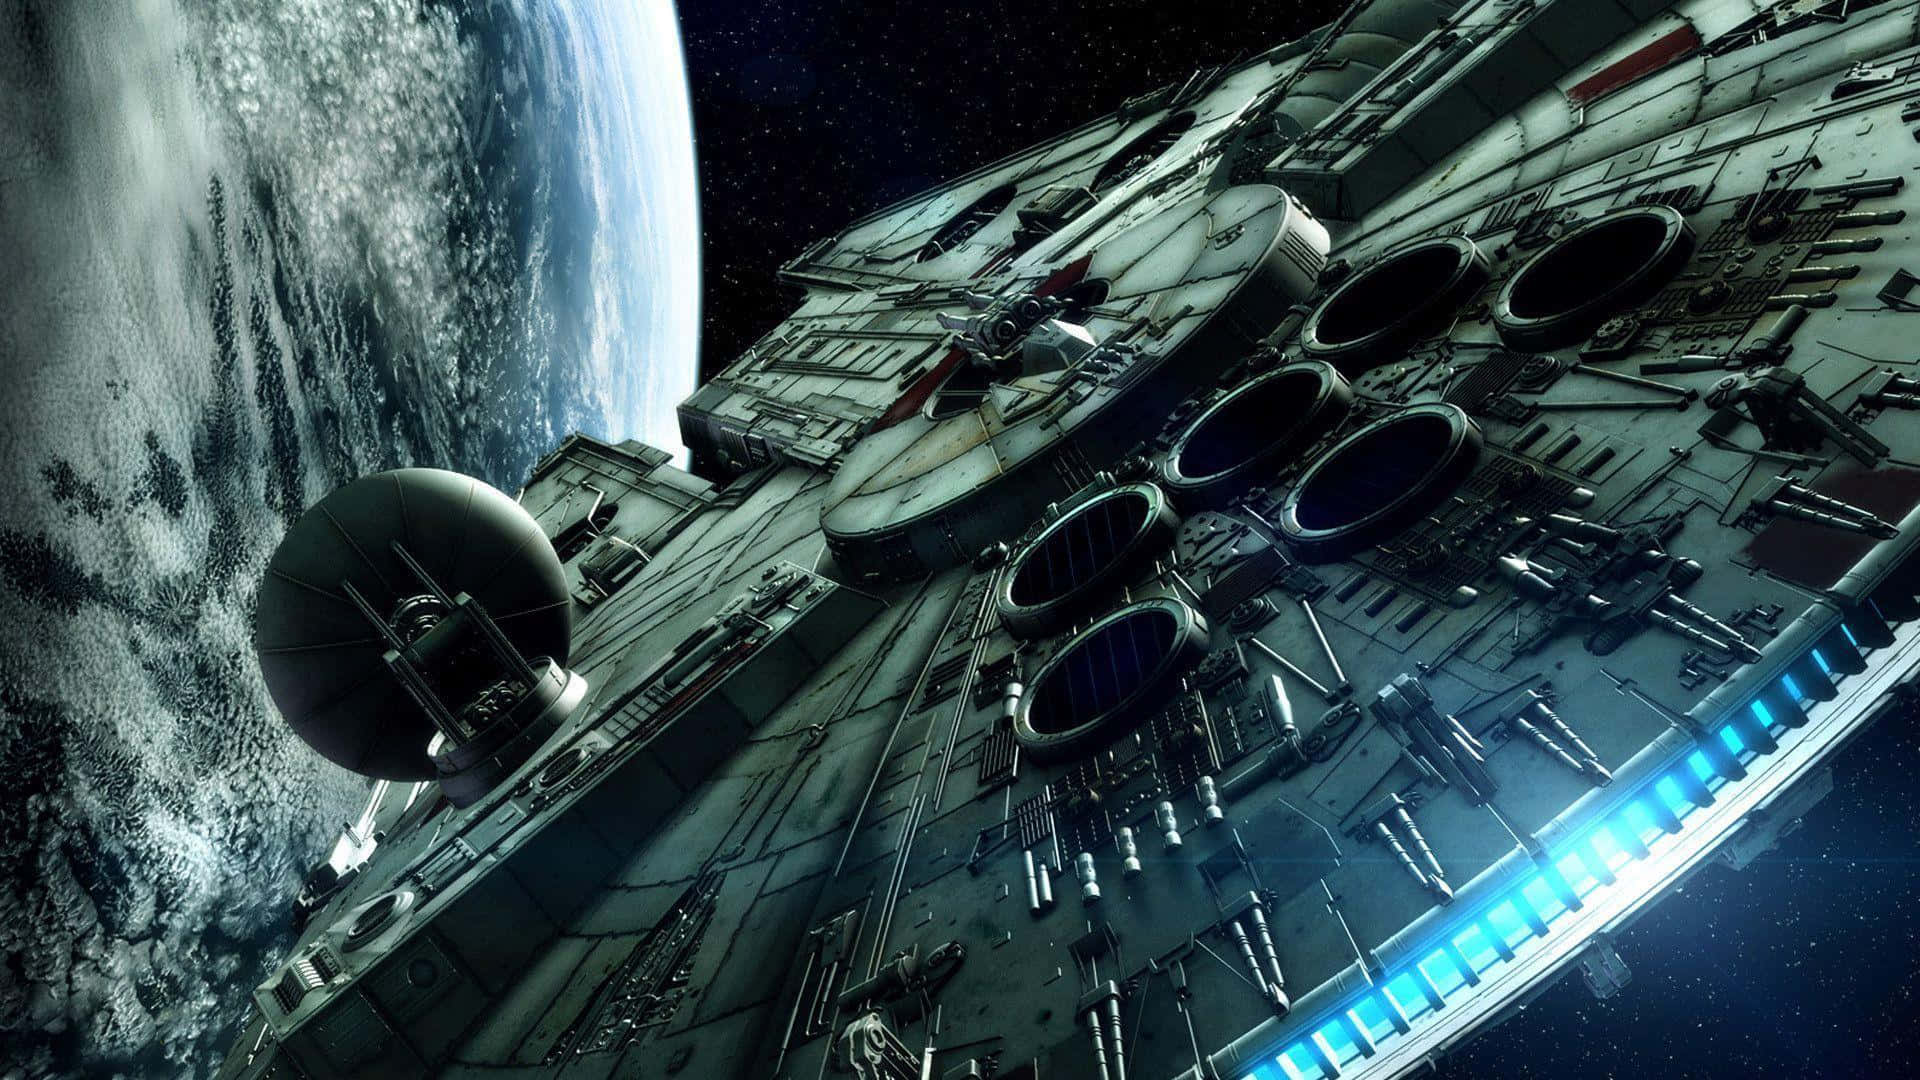 Imagendel Millennium Falcon De Star Wars En Un Planeta.